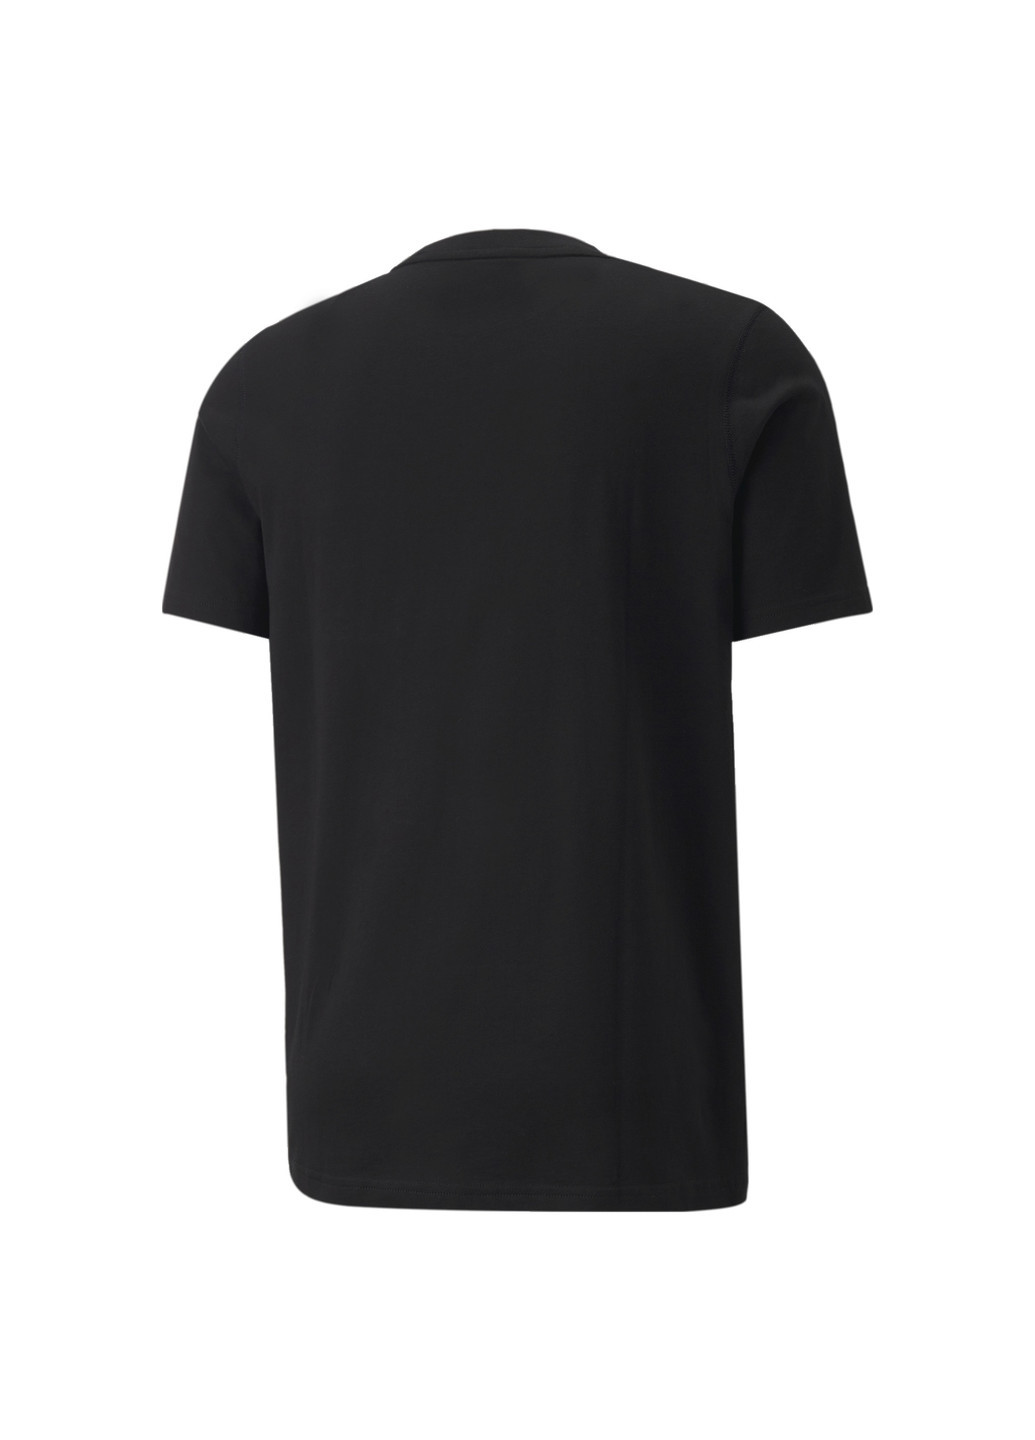 Черная футболка modern basics pocket men's tee Puma